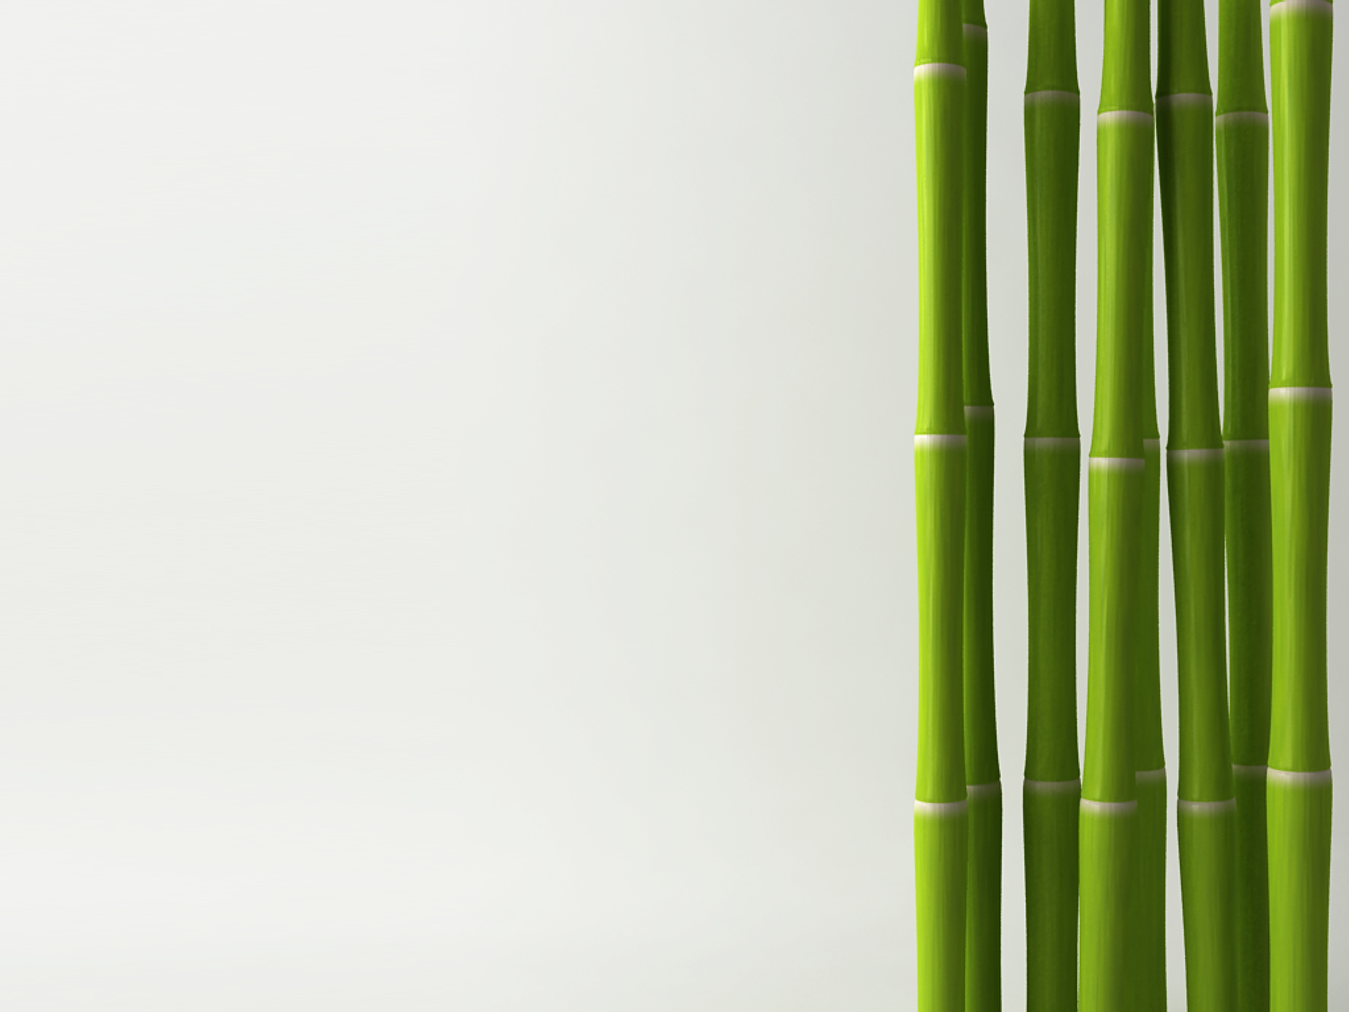 Бамбук Широшима. Бамбук по7бм024. Бамбук на белом фоне. Бамбуковые стебли.